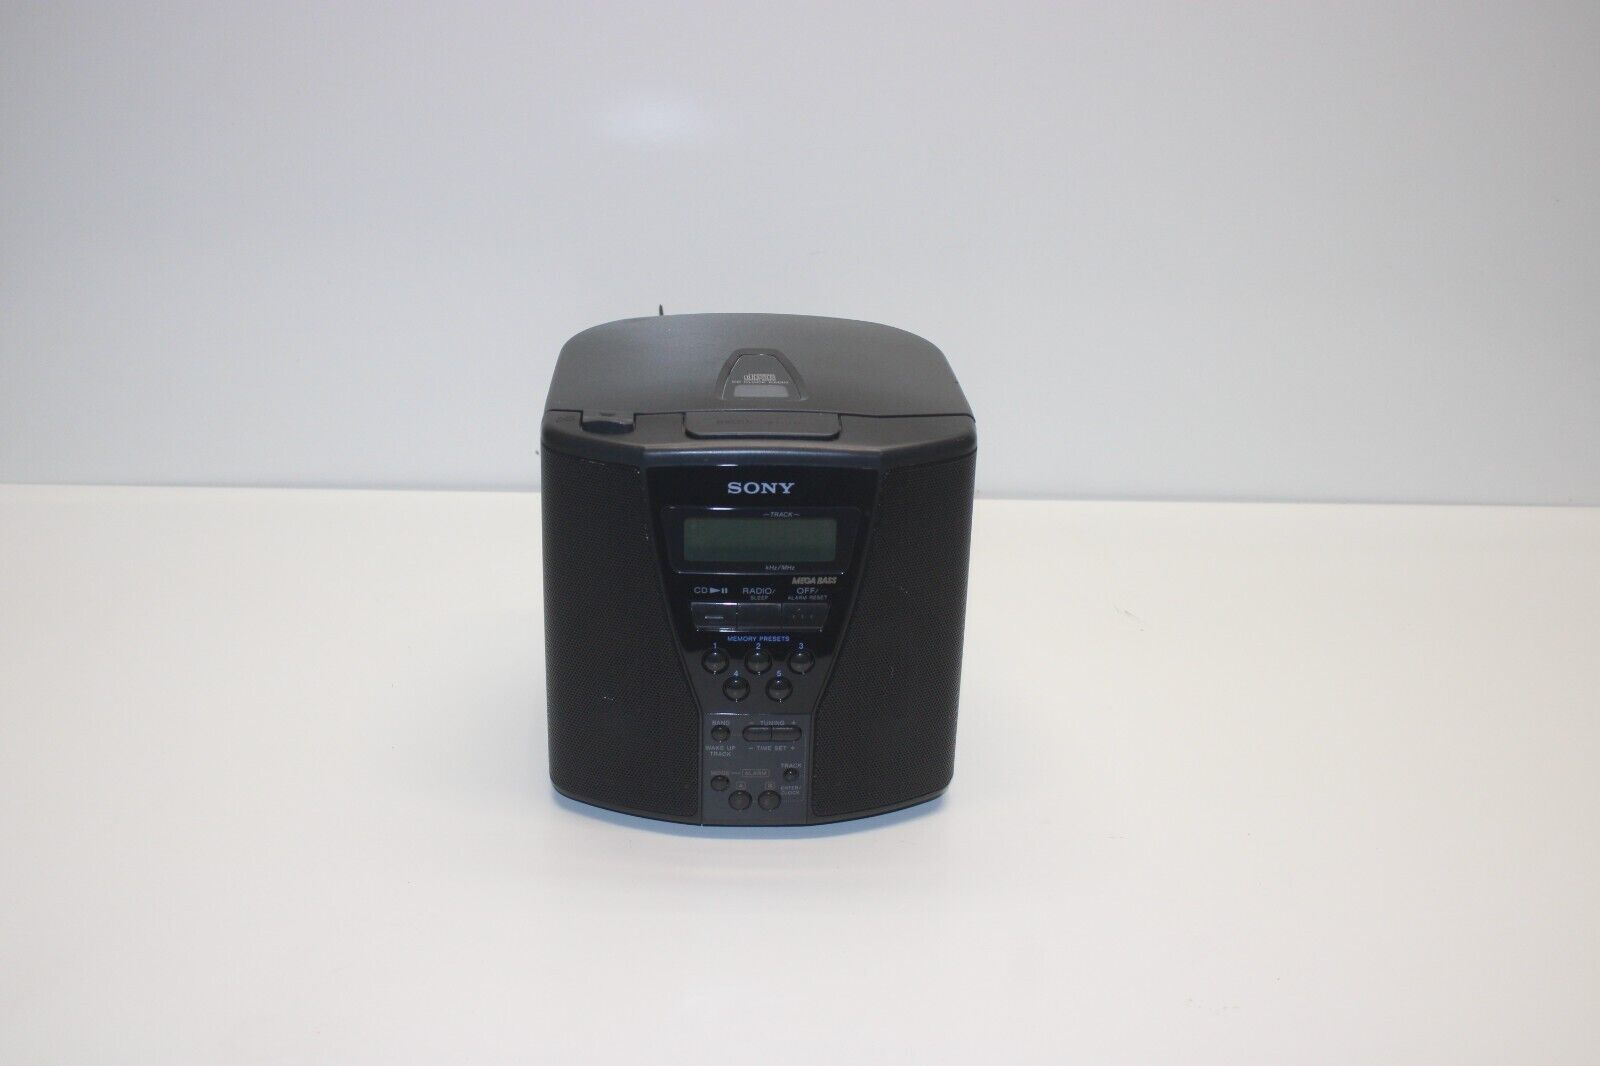 Sony ICF-CD833 CD Player Alarm Clock-AM/FM